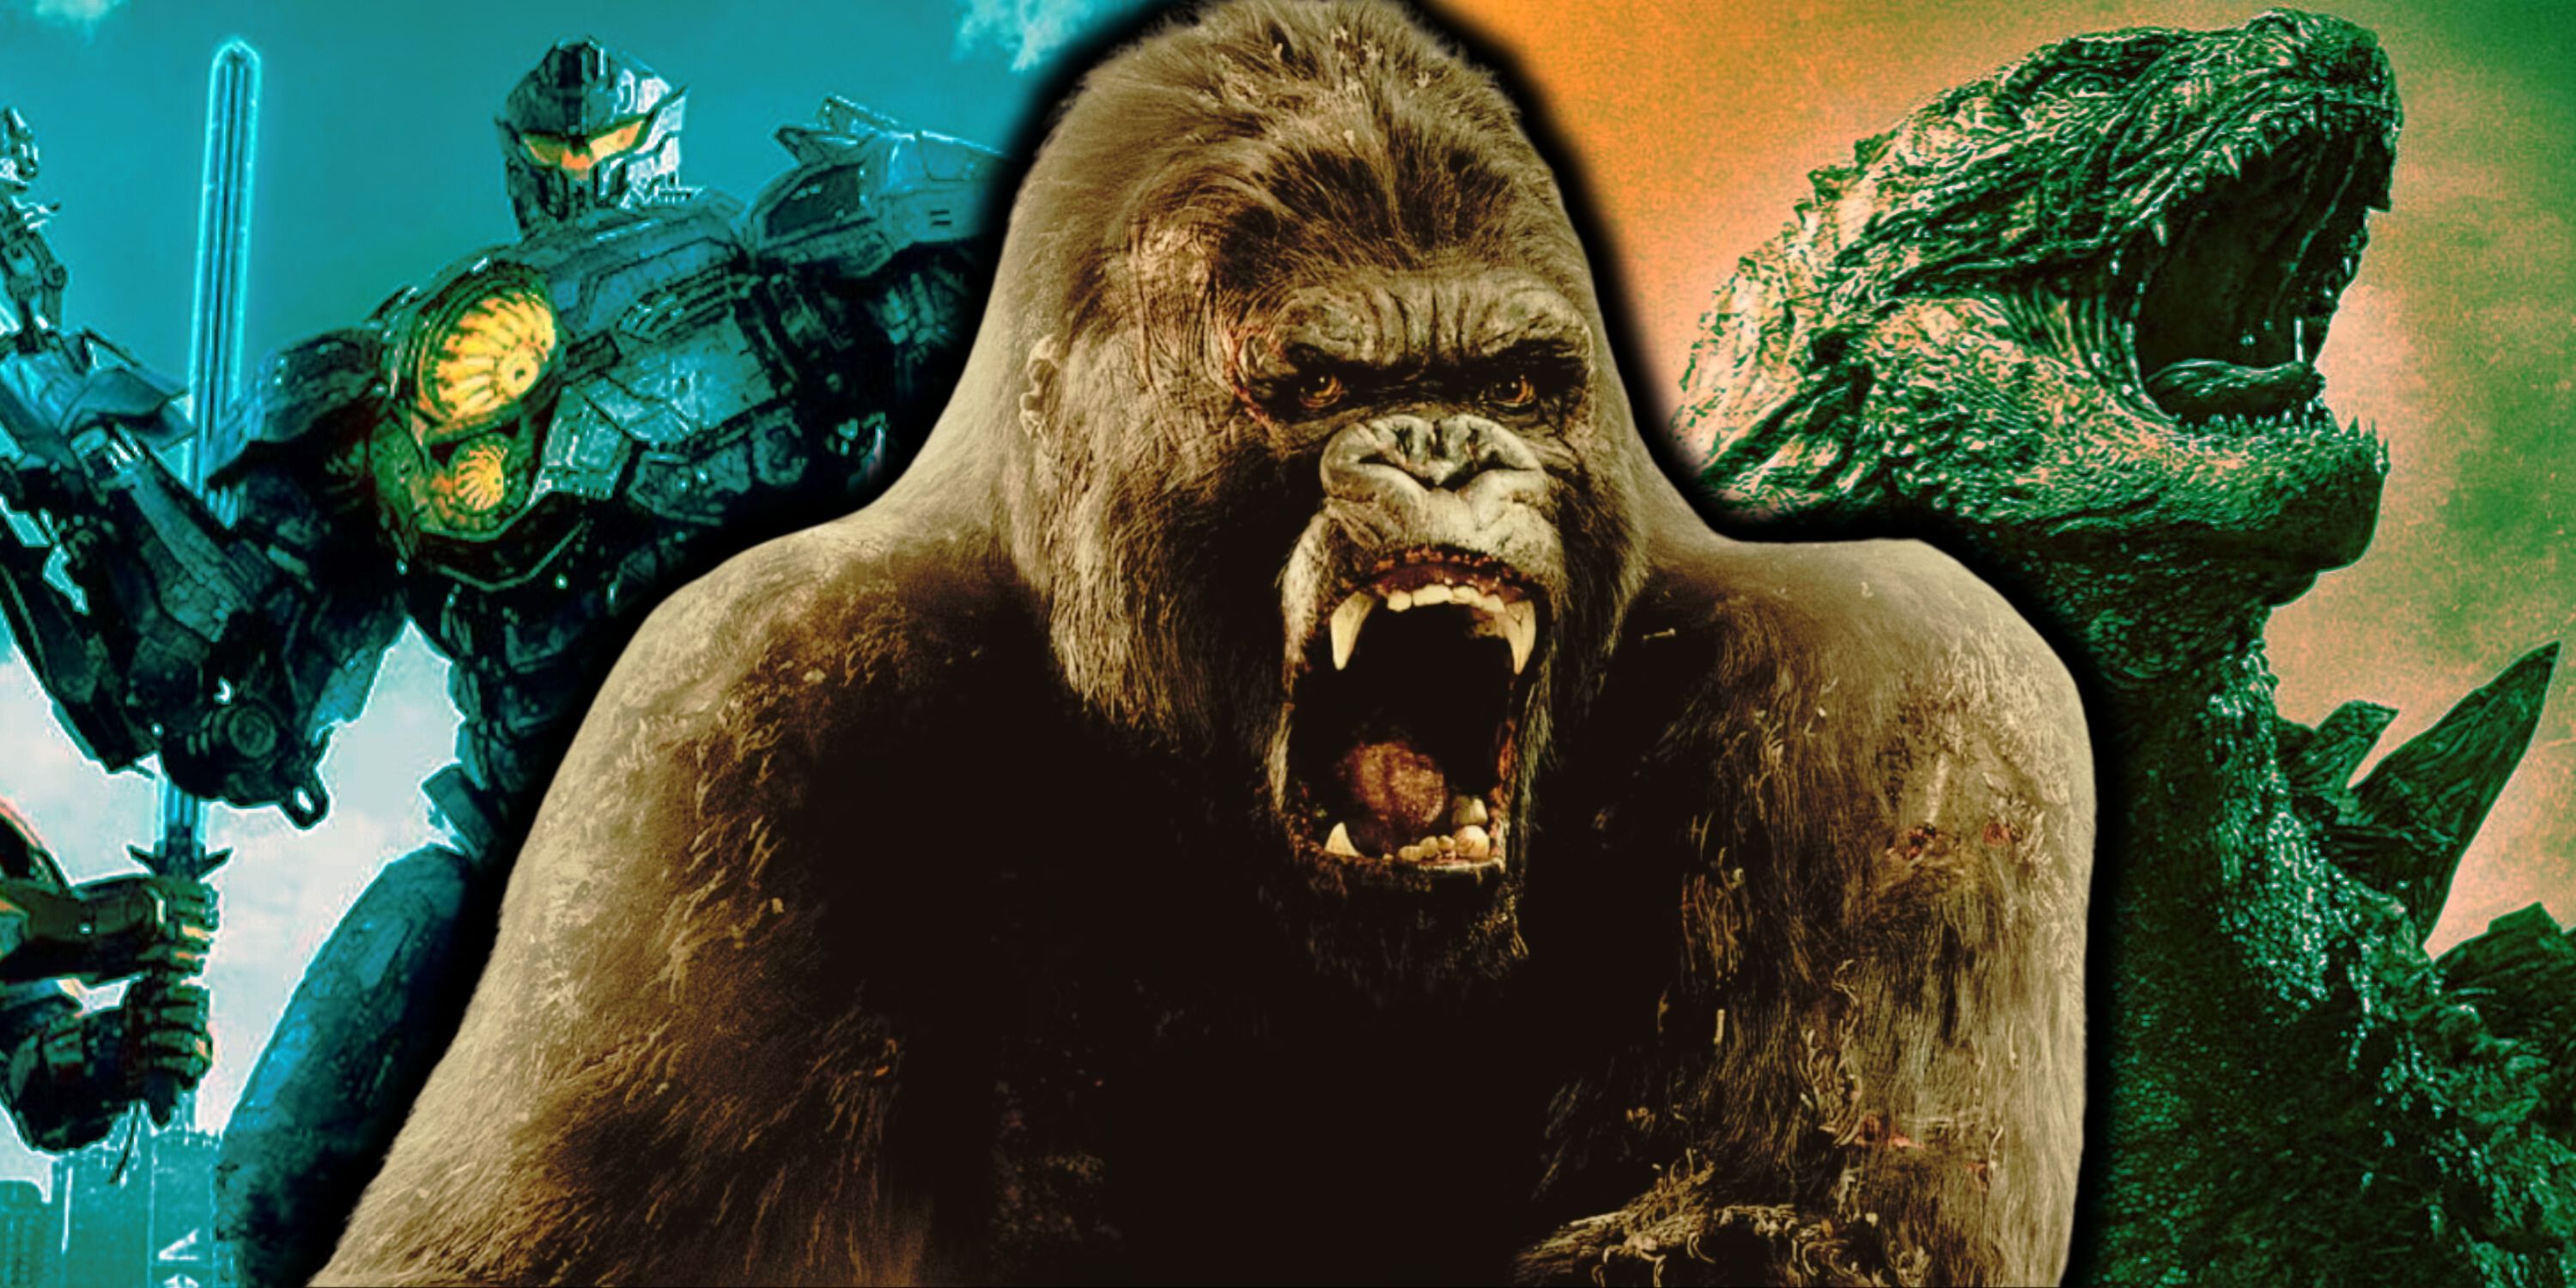 Composite image Pacific rim jaegers, King Kong, Godzilla